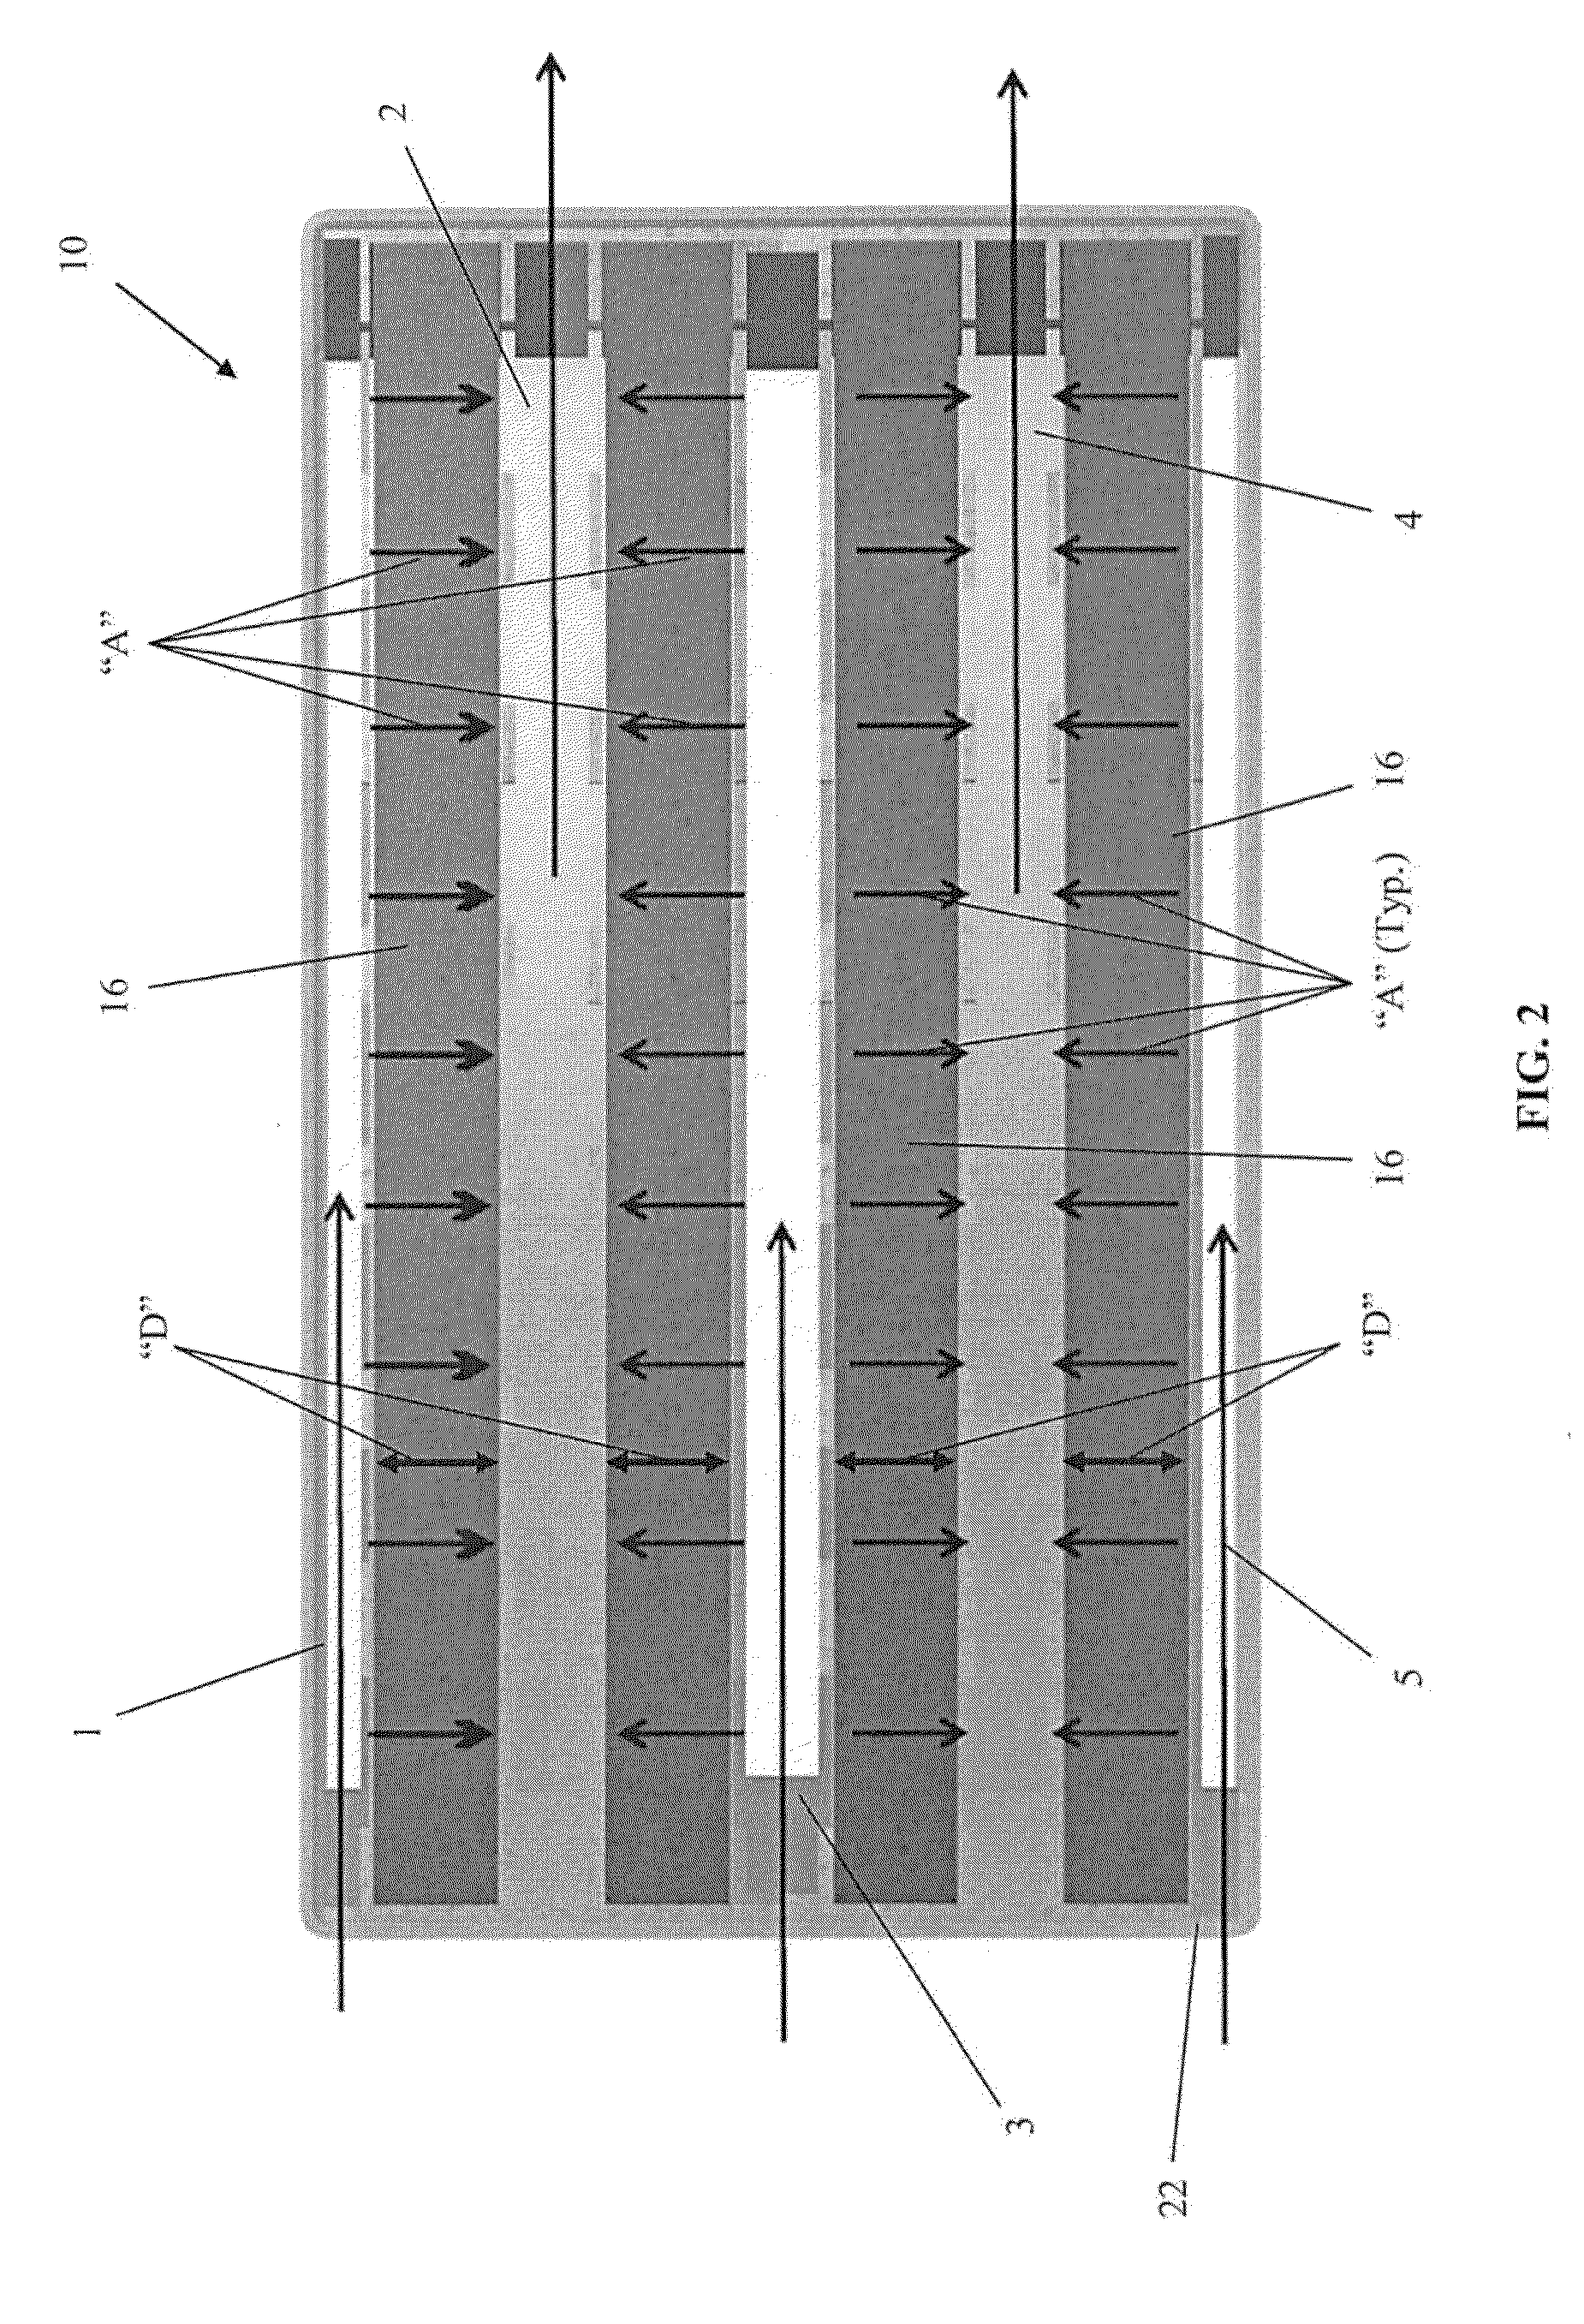 Conformal split planar flow air purifying filter